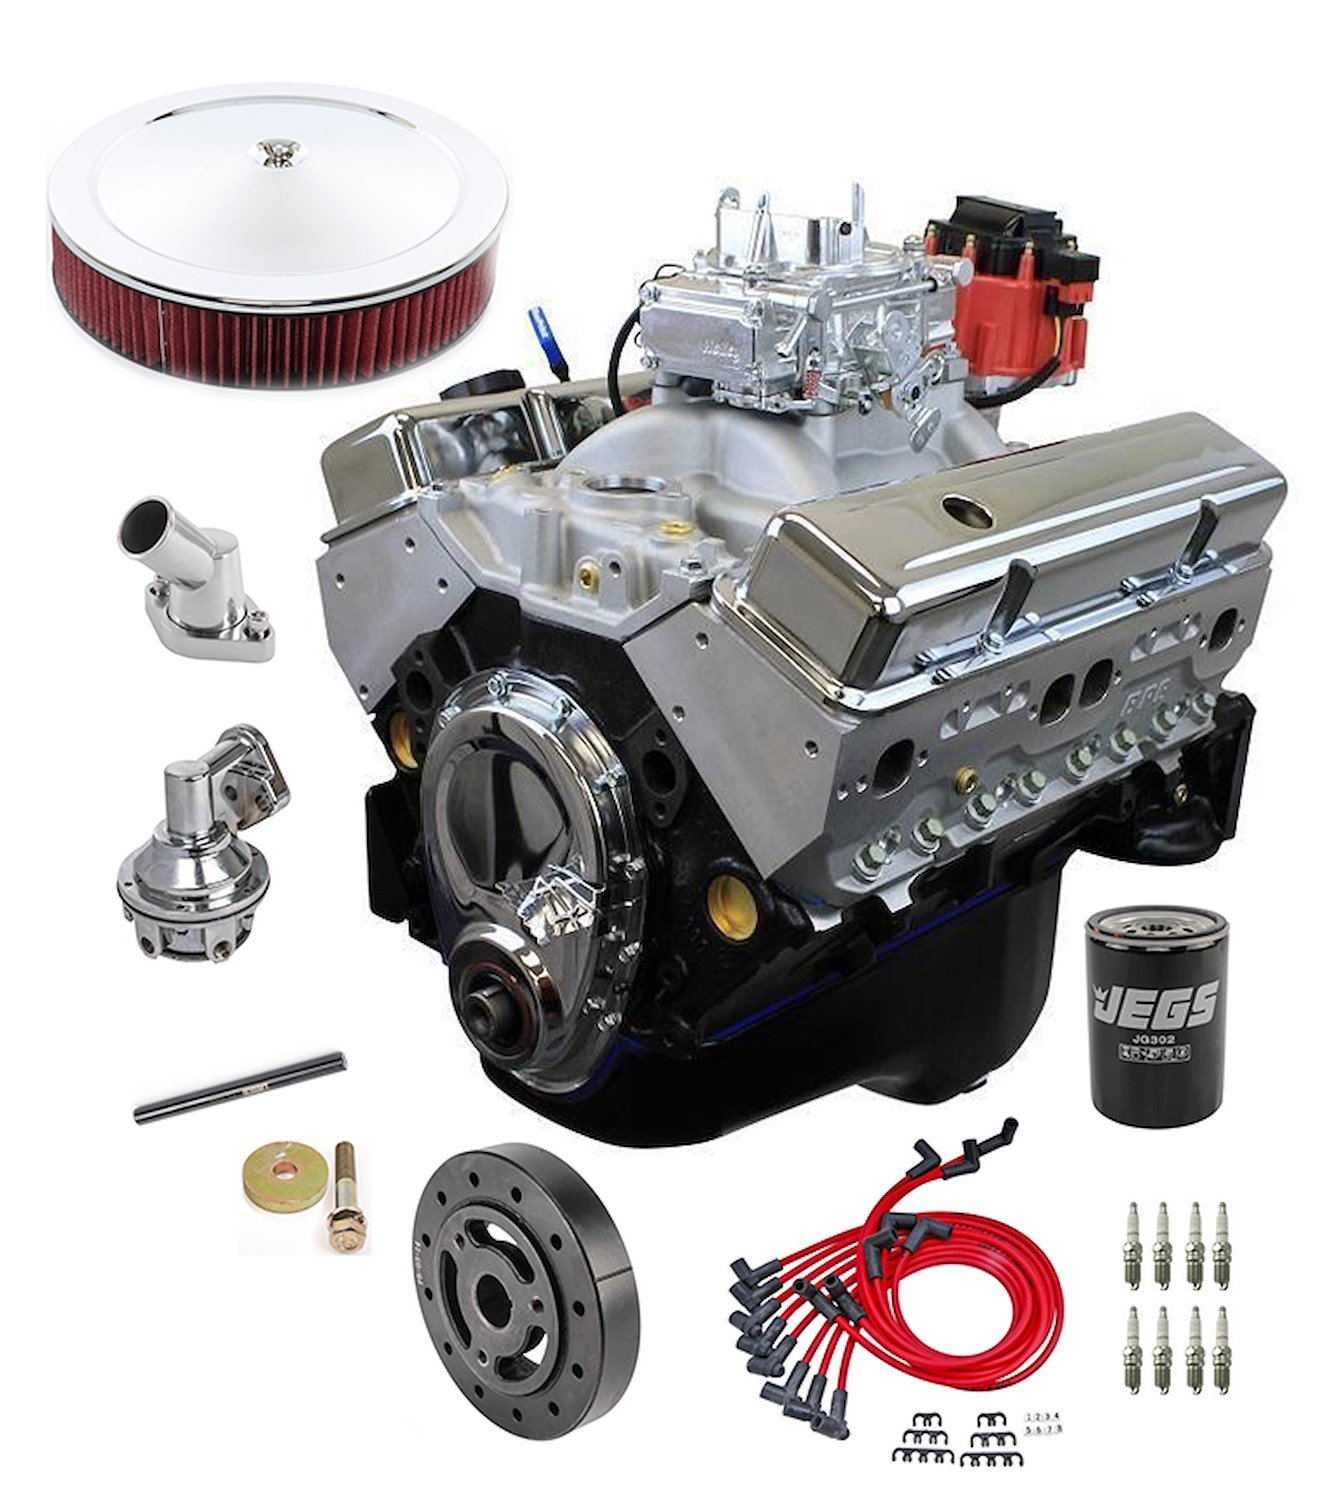 New Block Casting 350 ci Cruiser Crate Engine Kit [Carbureted]